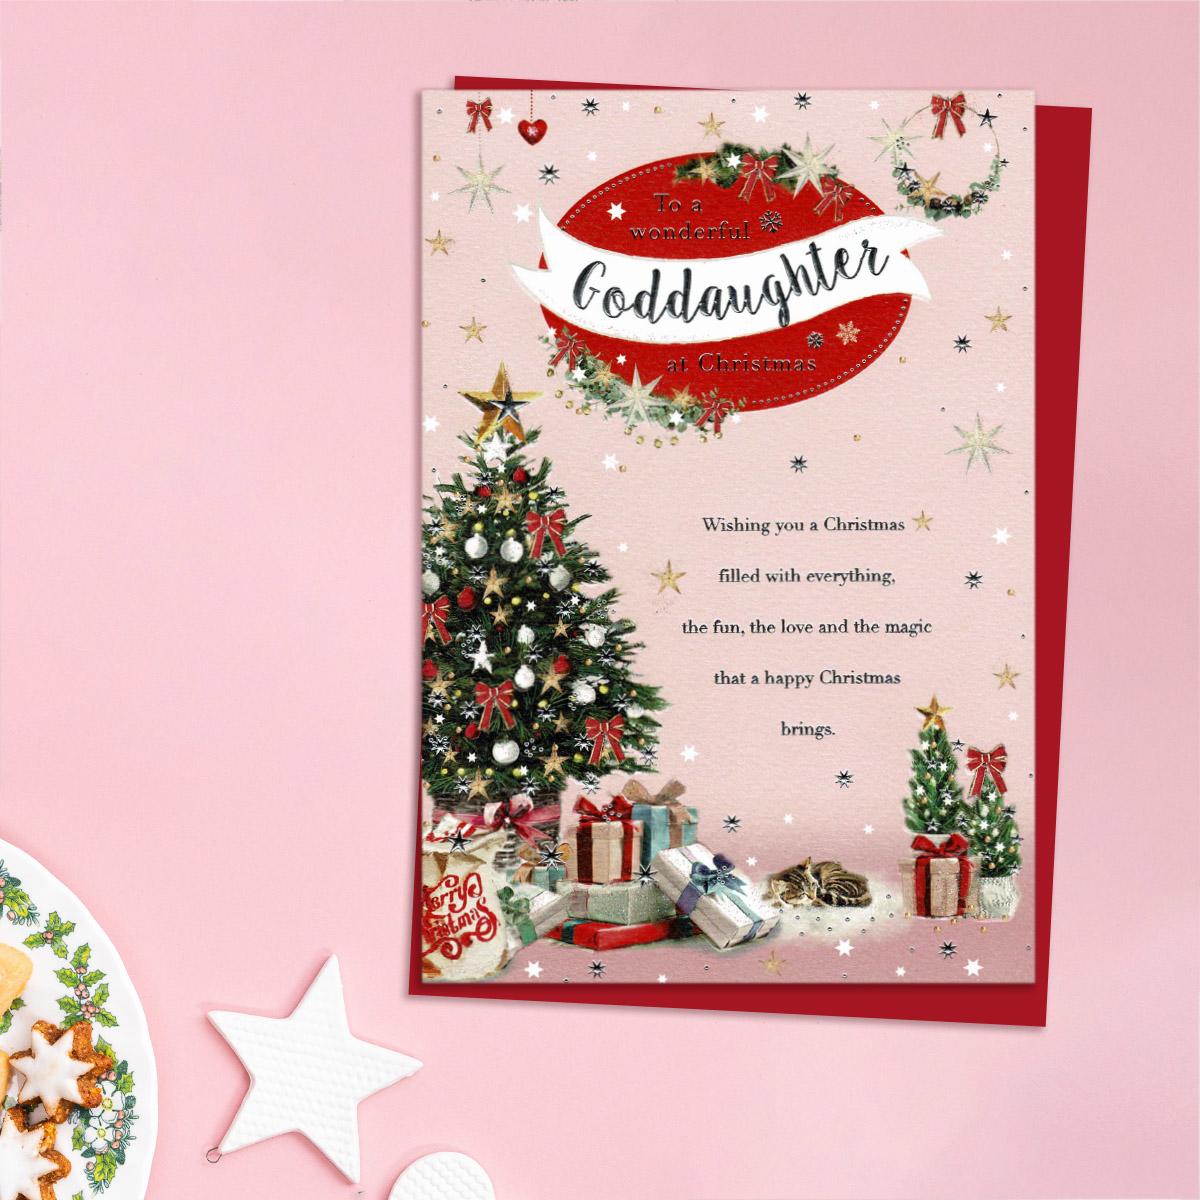 Wonderful Goddaughter Christmas Card Front Image